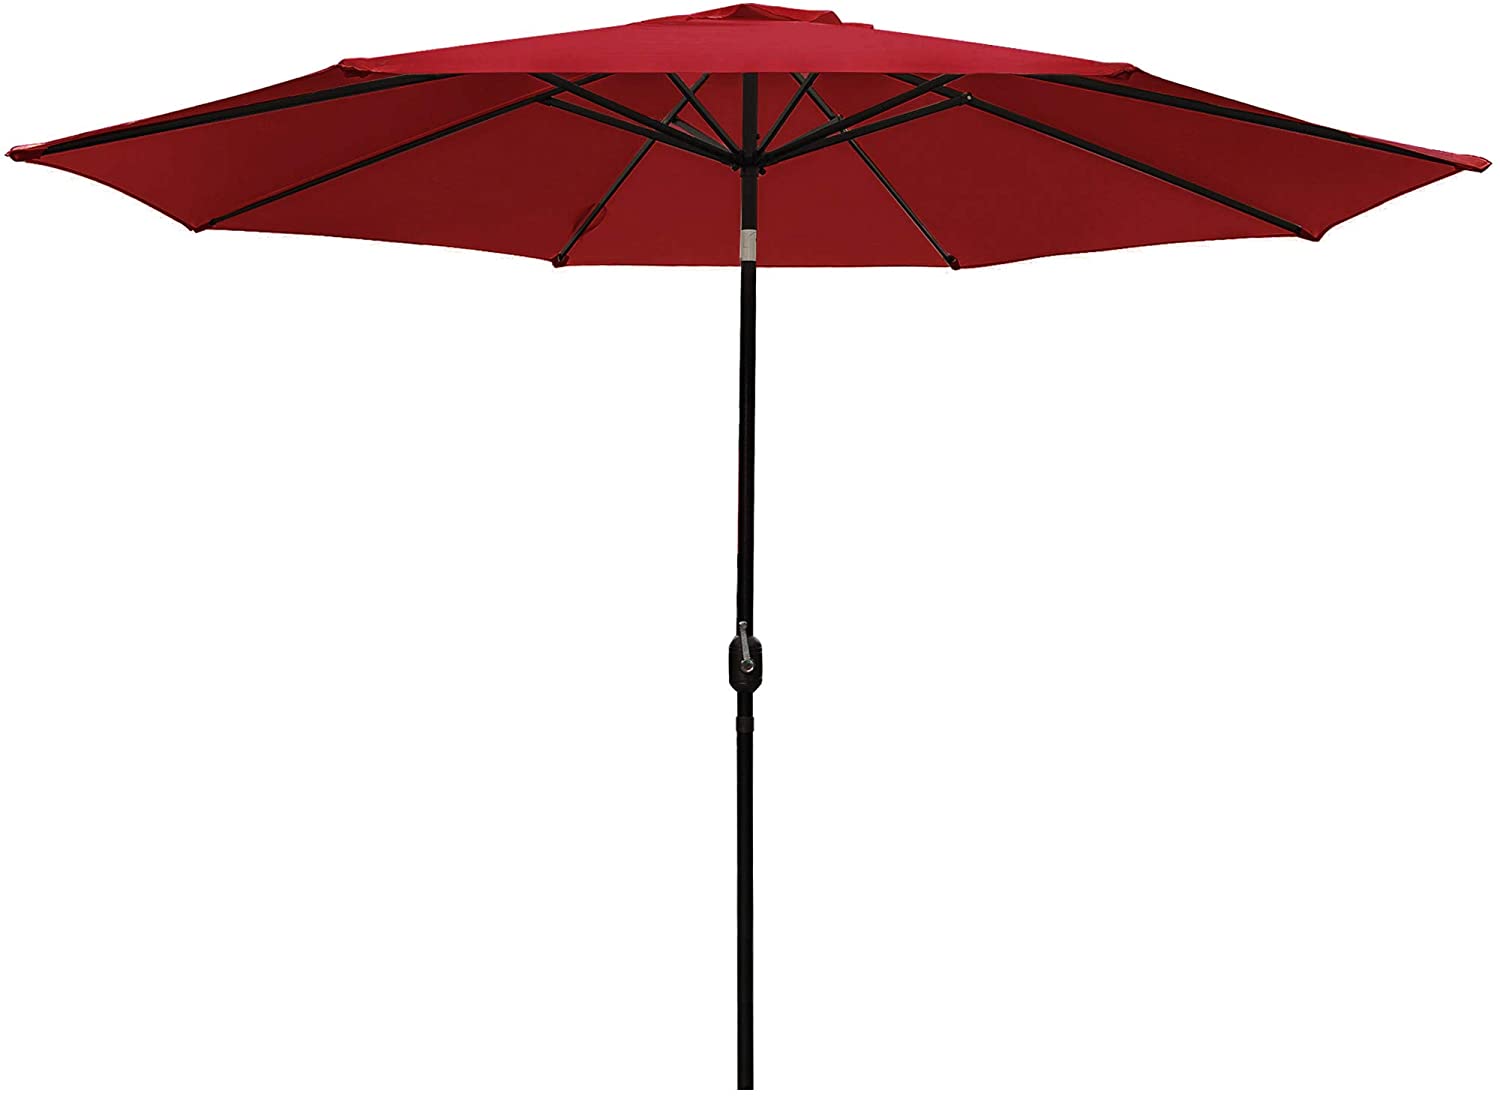 DOIFUN 11ft Patio Table Umbrella